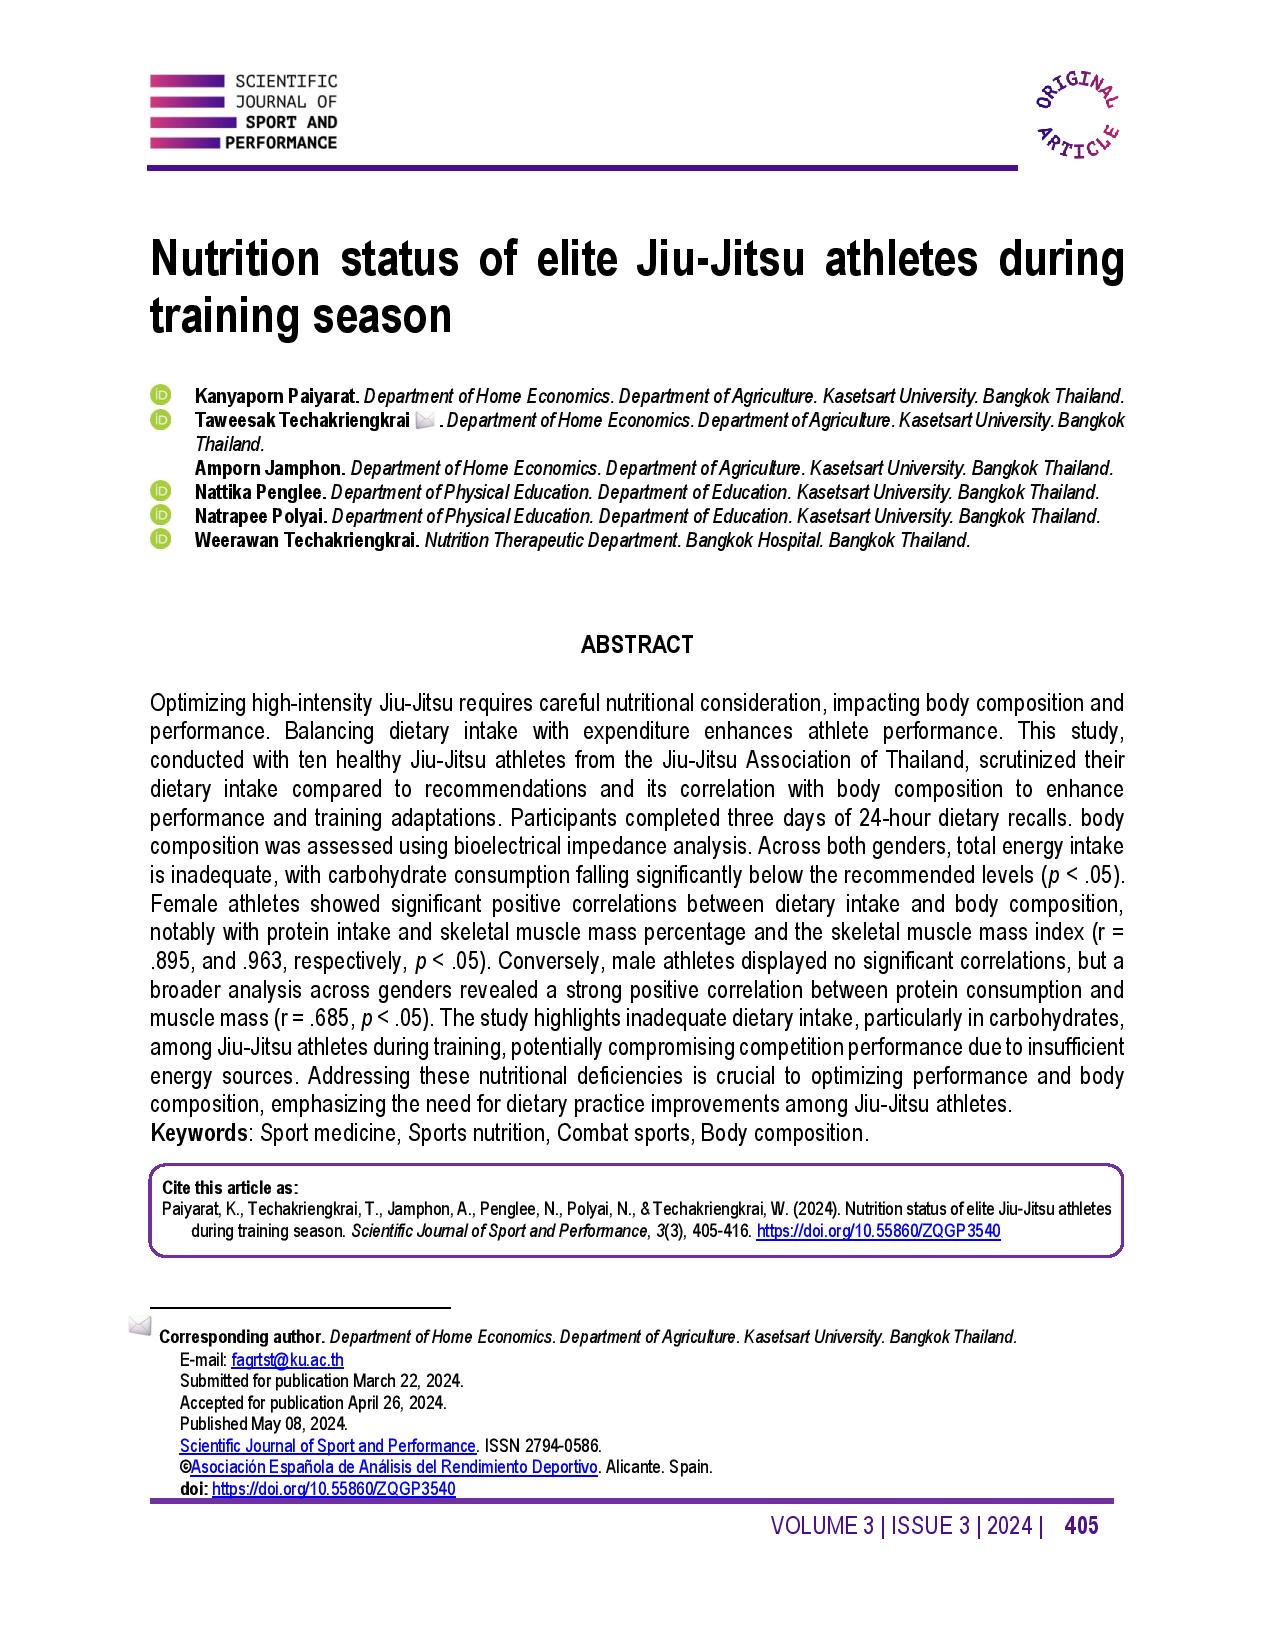 Nutrition status of elite Jiu-Jitsu athletes during training season